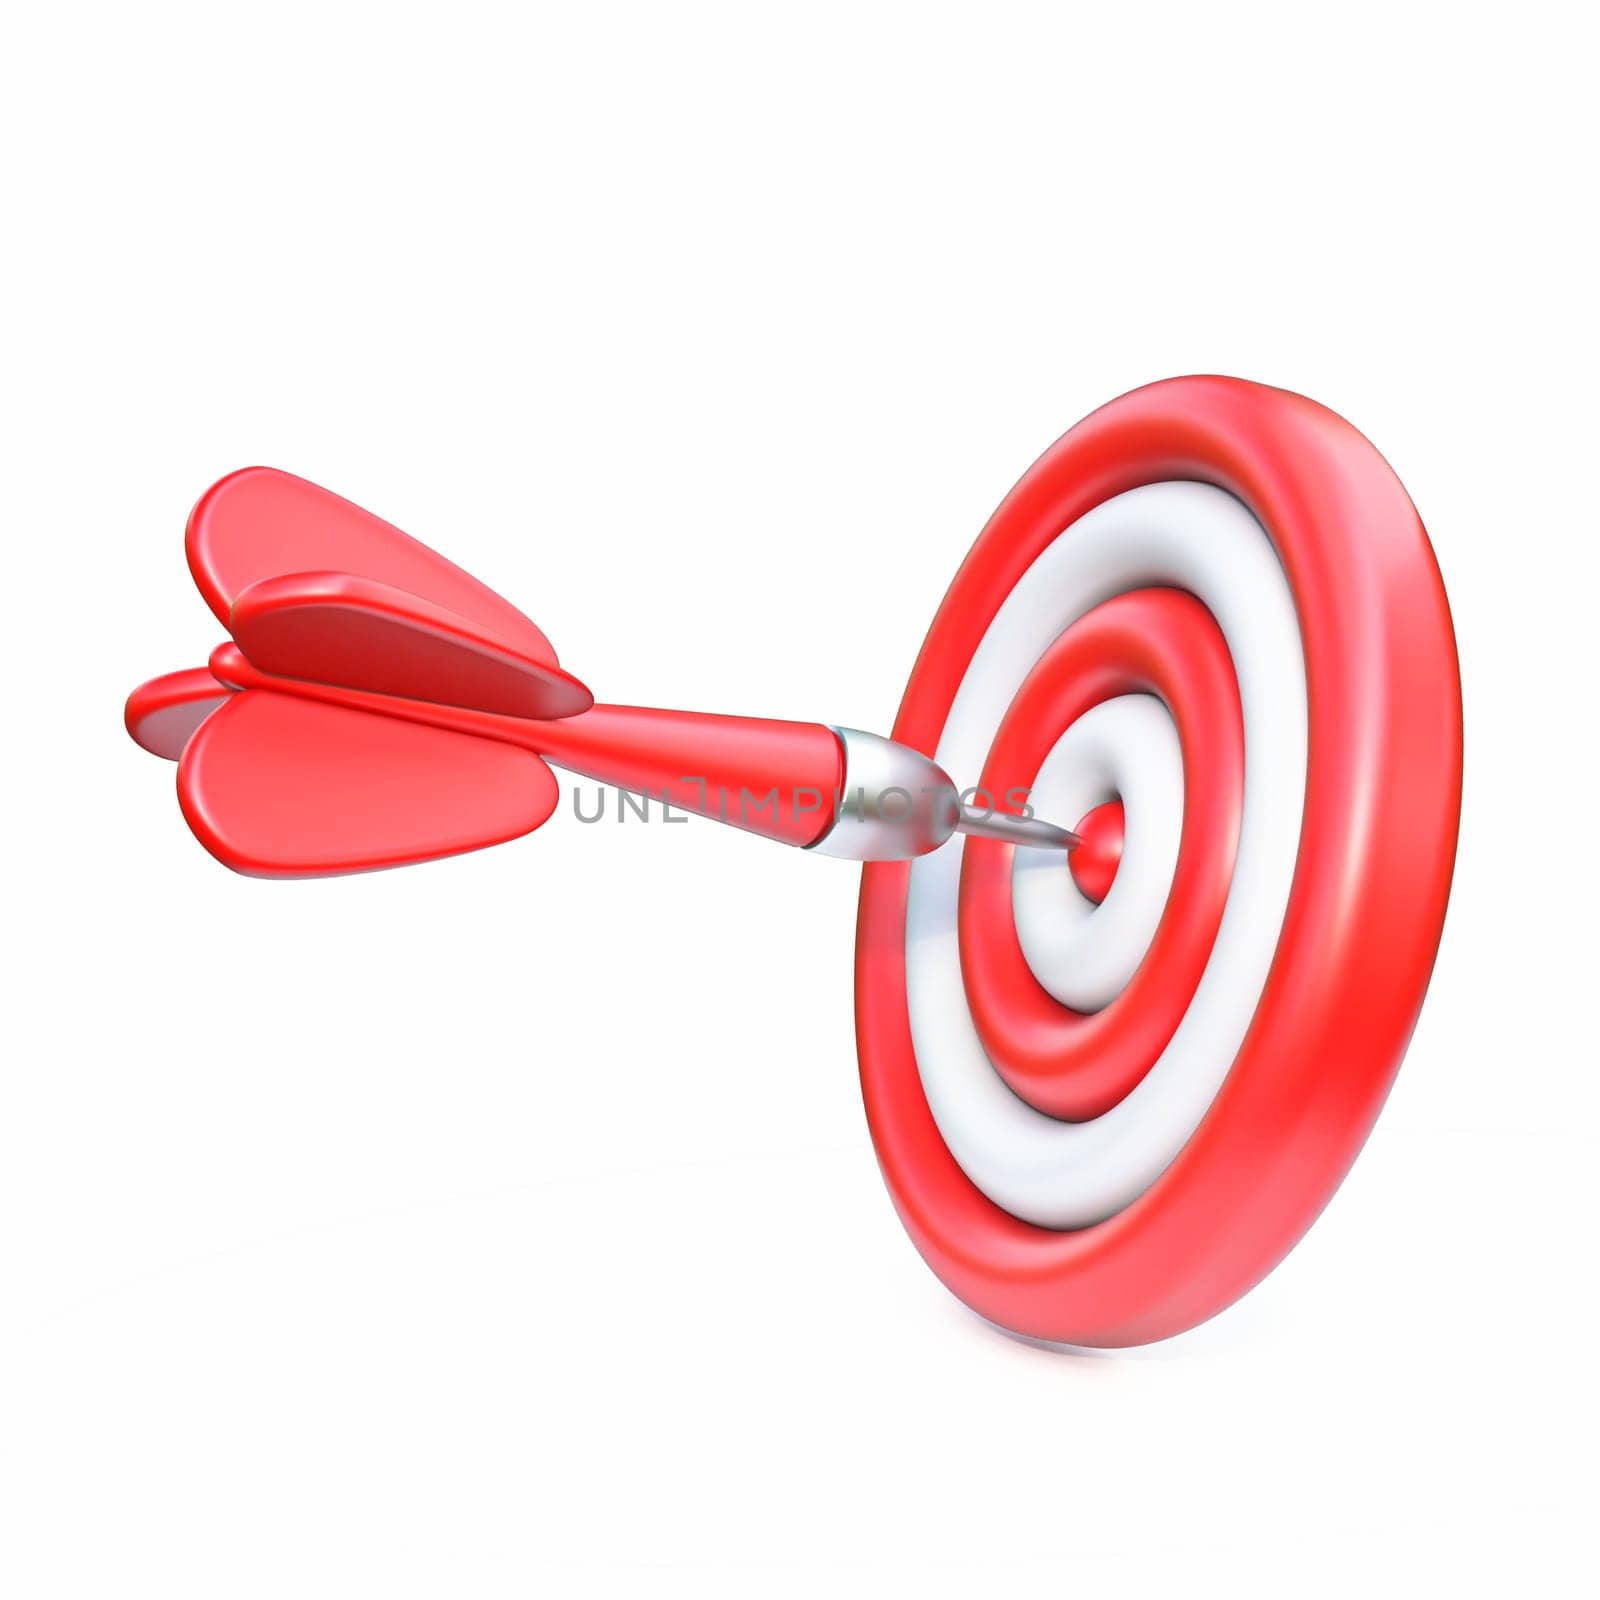 Red cartoon dart target 3D by djmilic